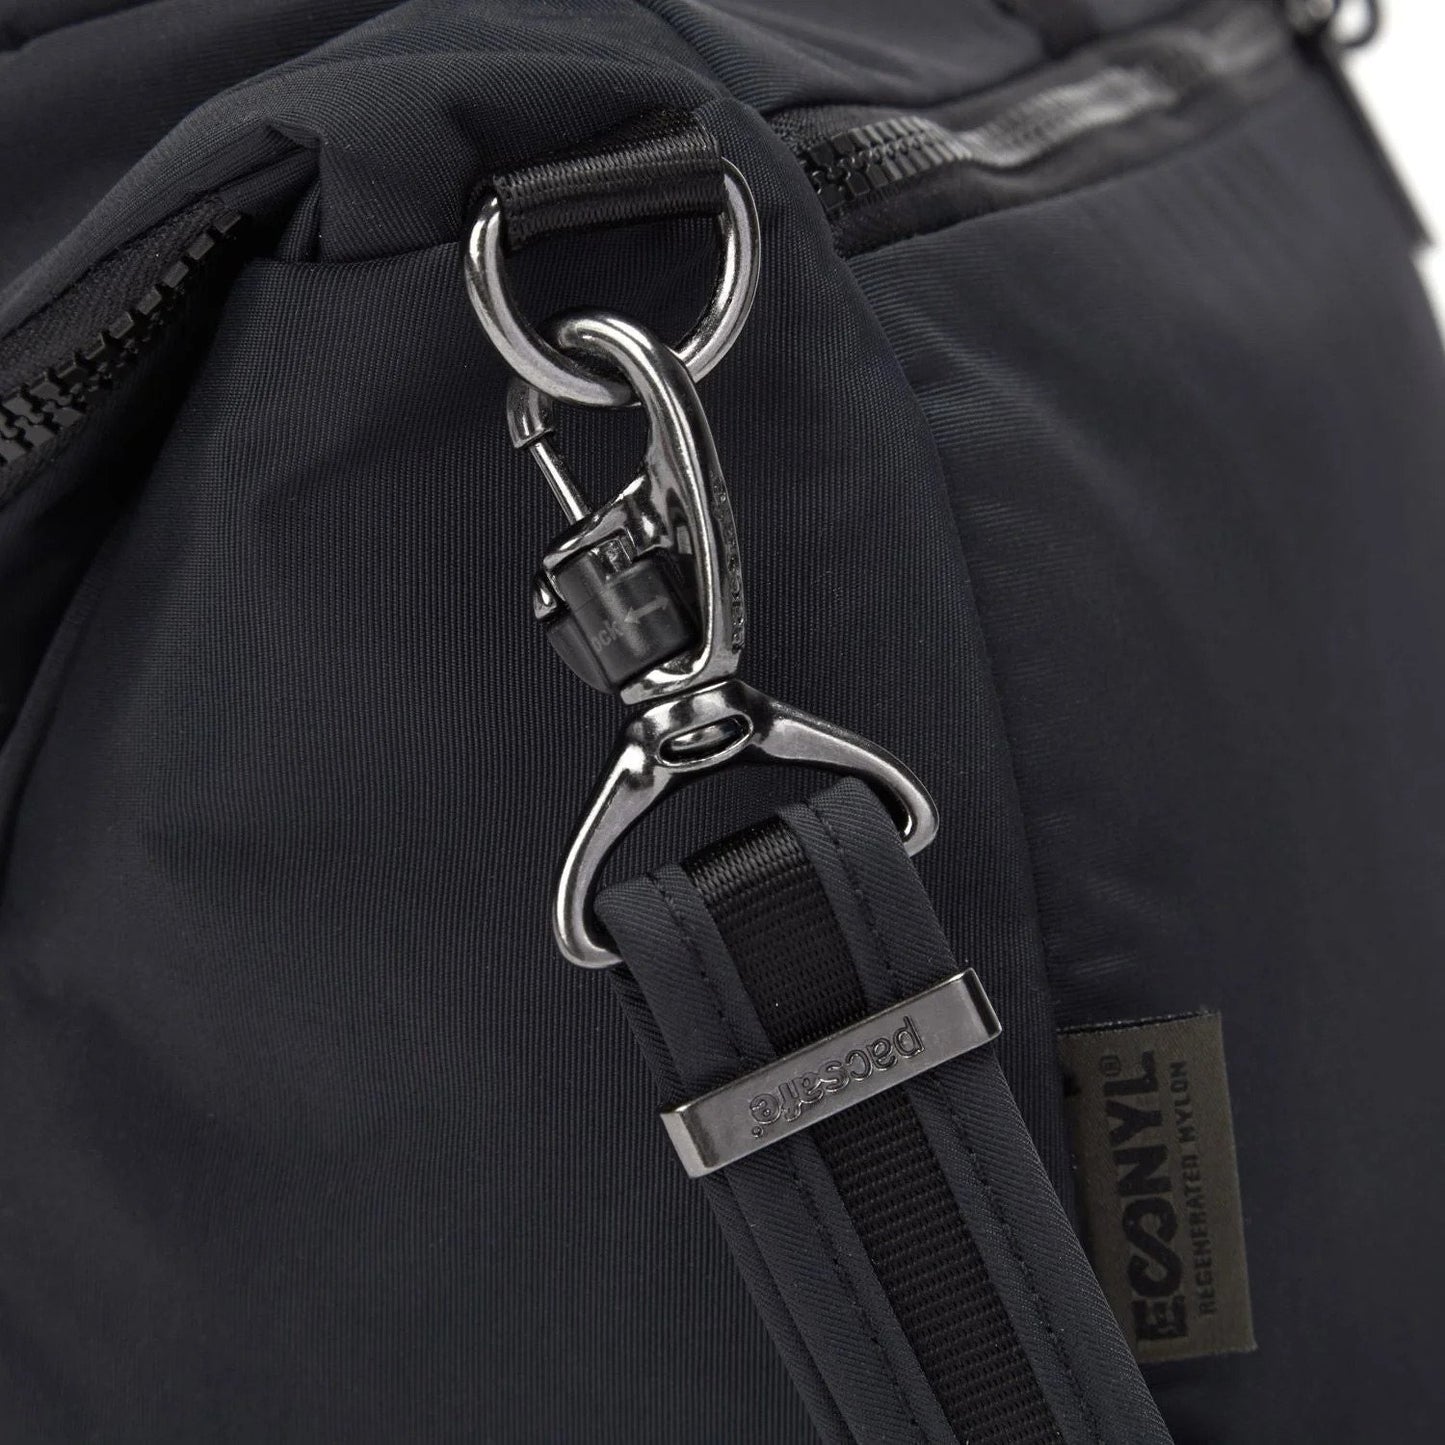 Pacsafe Citysafe CX Econyl® Anti-Theft Convertible Backpack / Shoulder Bag